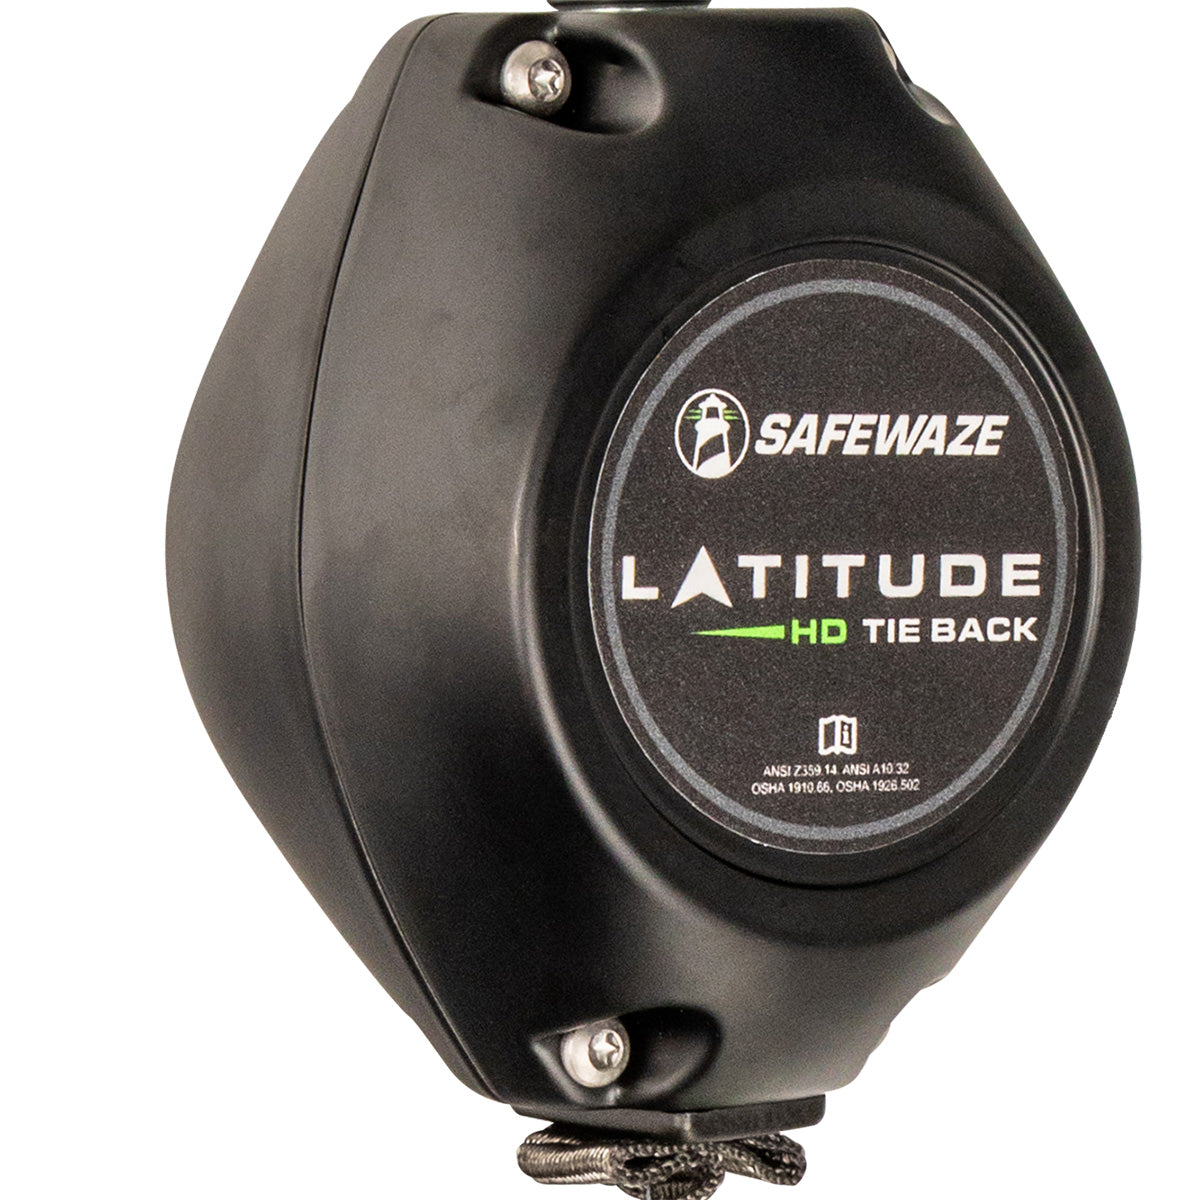 Latitude HD 7' Dual Web SRL: FS-EX313, Carabiner, 20" Tie-back, Tie-Back Snap Hooks       